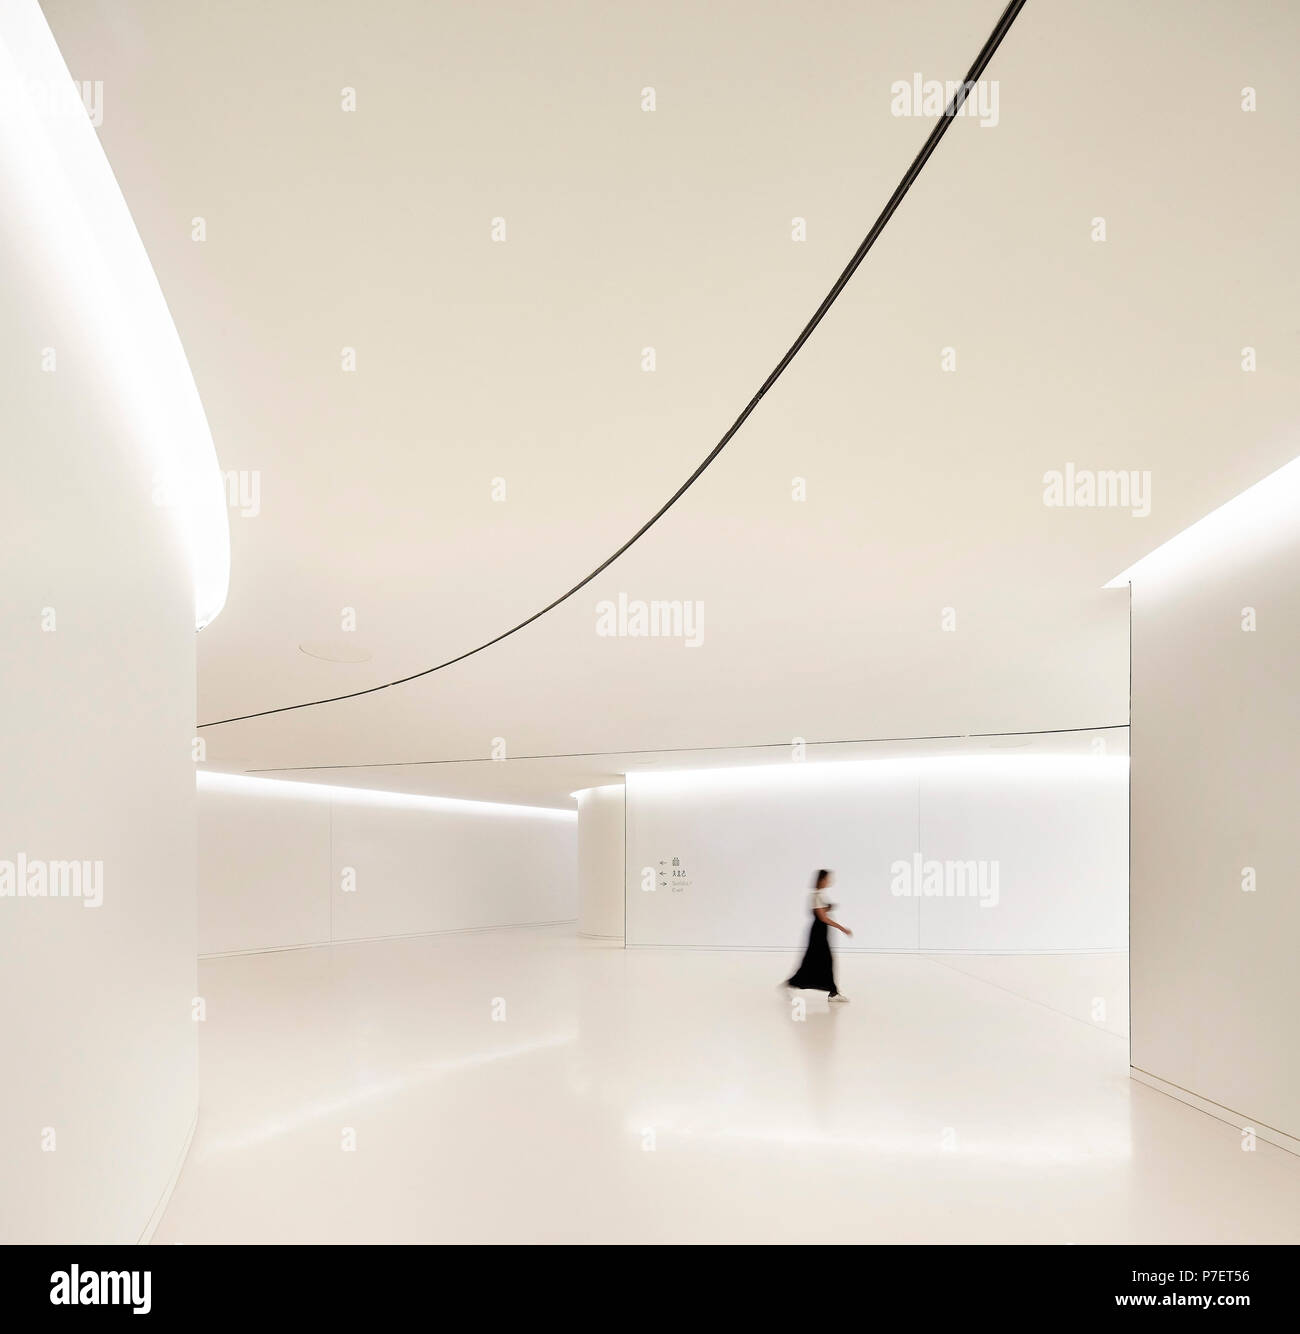 Empty gallery interior. MAAT, Lisbon, Portugal. Architect: A LA, 2016. Stock Photo